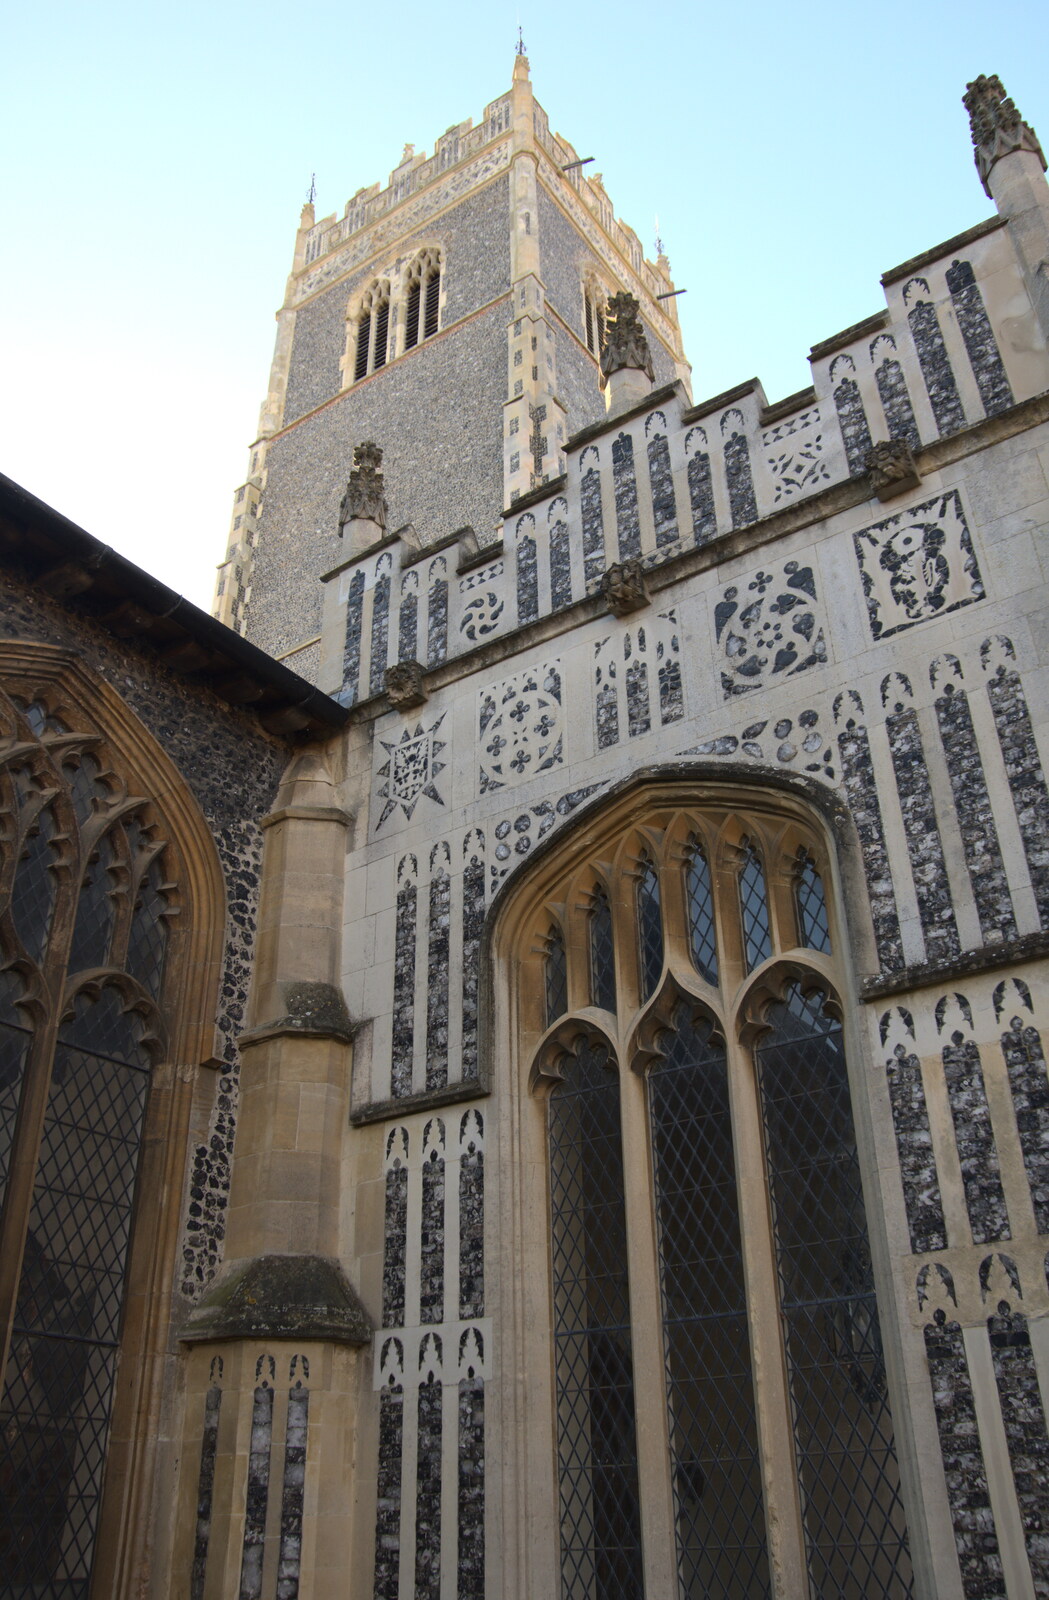 St. Mary's church tower from Isobel's Birthday, Woodbridge, Suffolk - 2nd November 2020